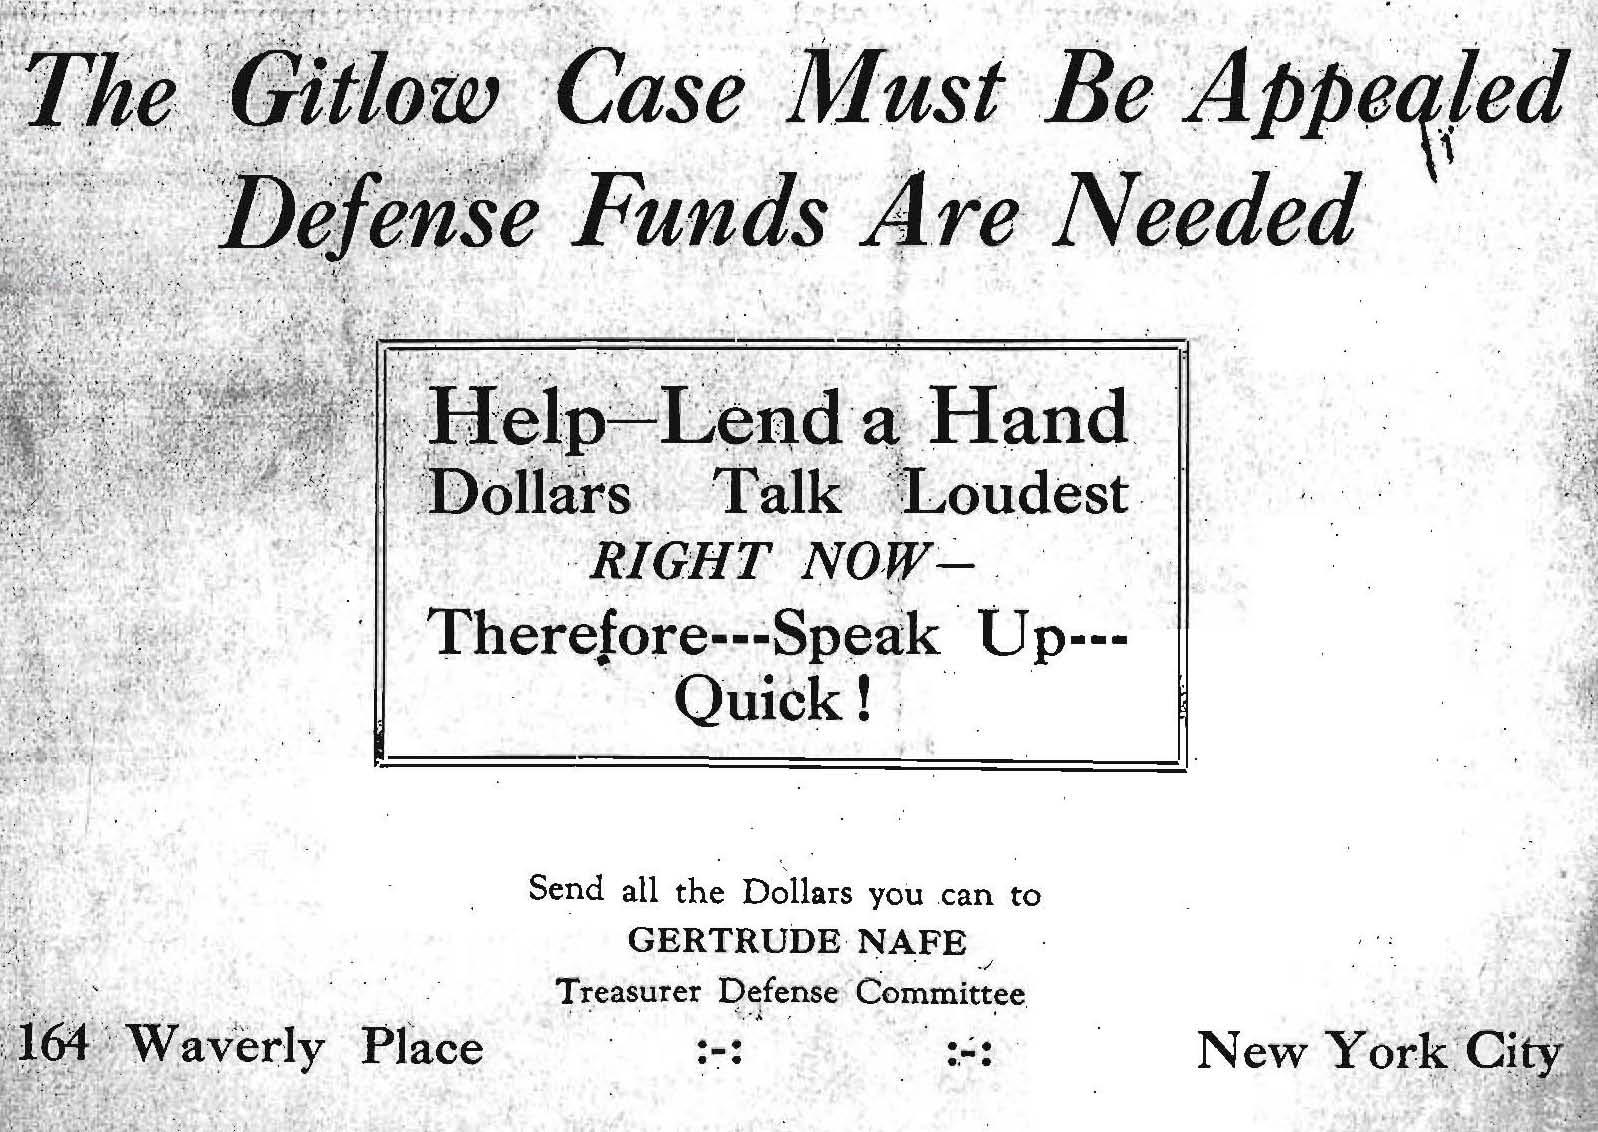 Case Brief #1: Gitlow v. New York